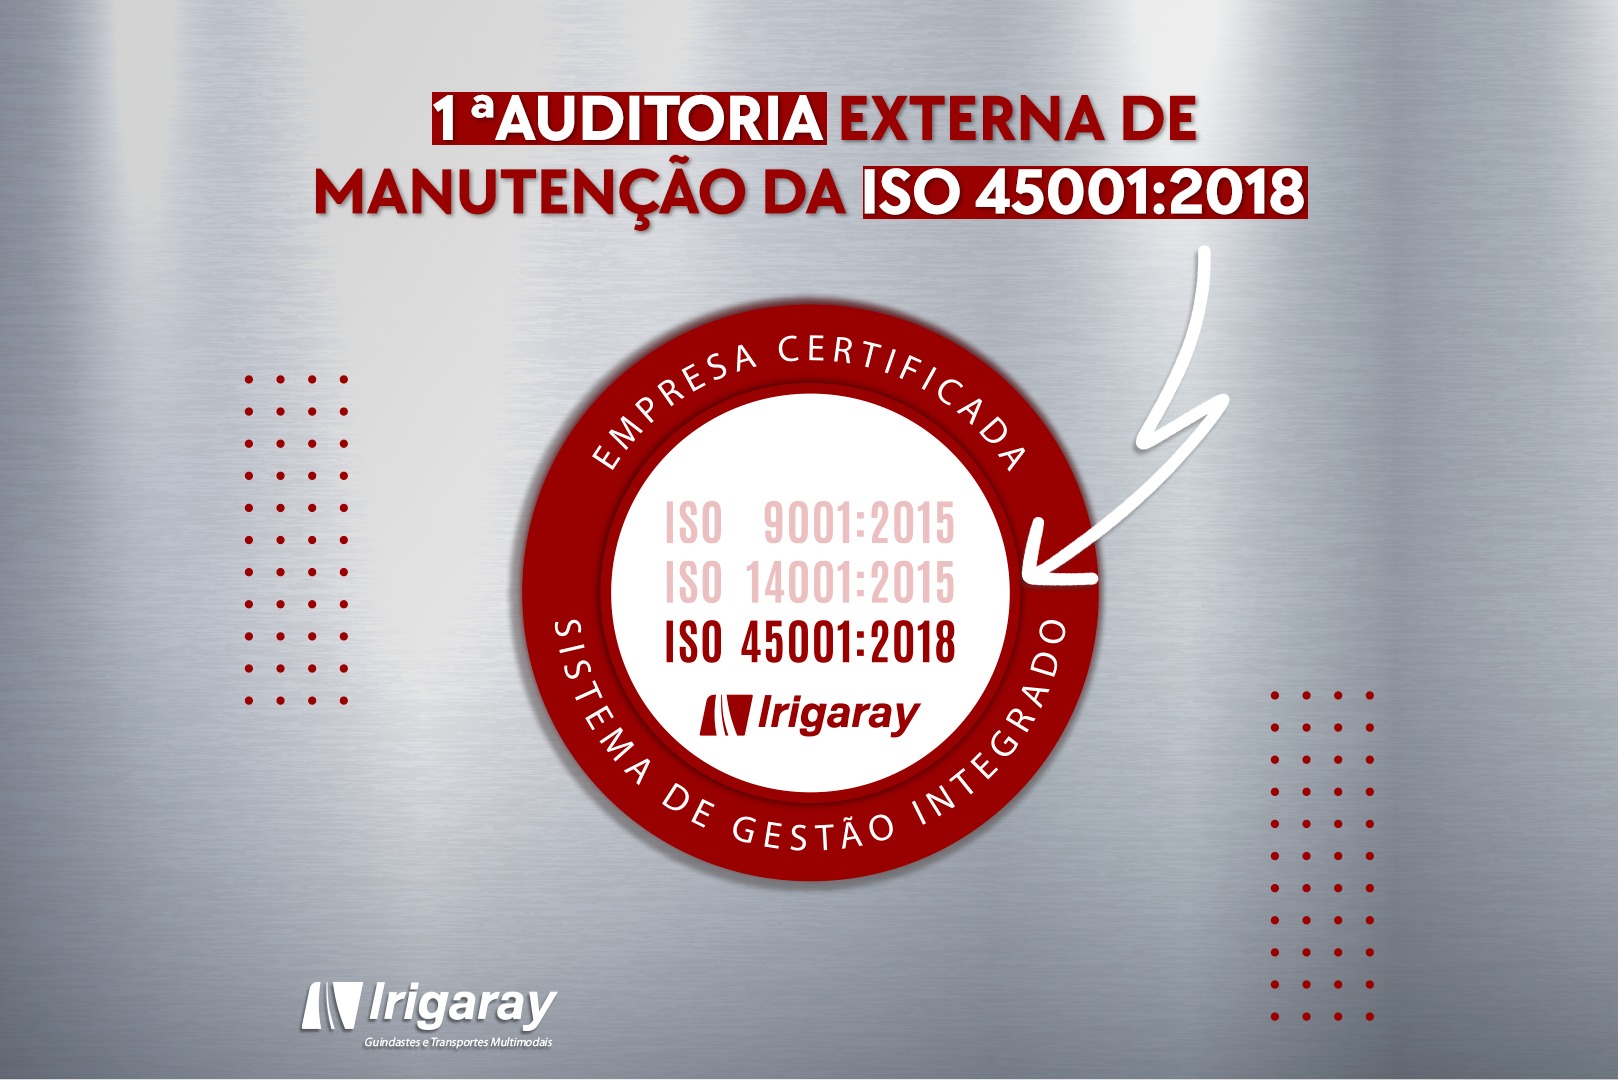 1st EXTERNAL MAINTENANCE AUDIT OF ISO 45001:2018